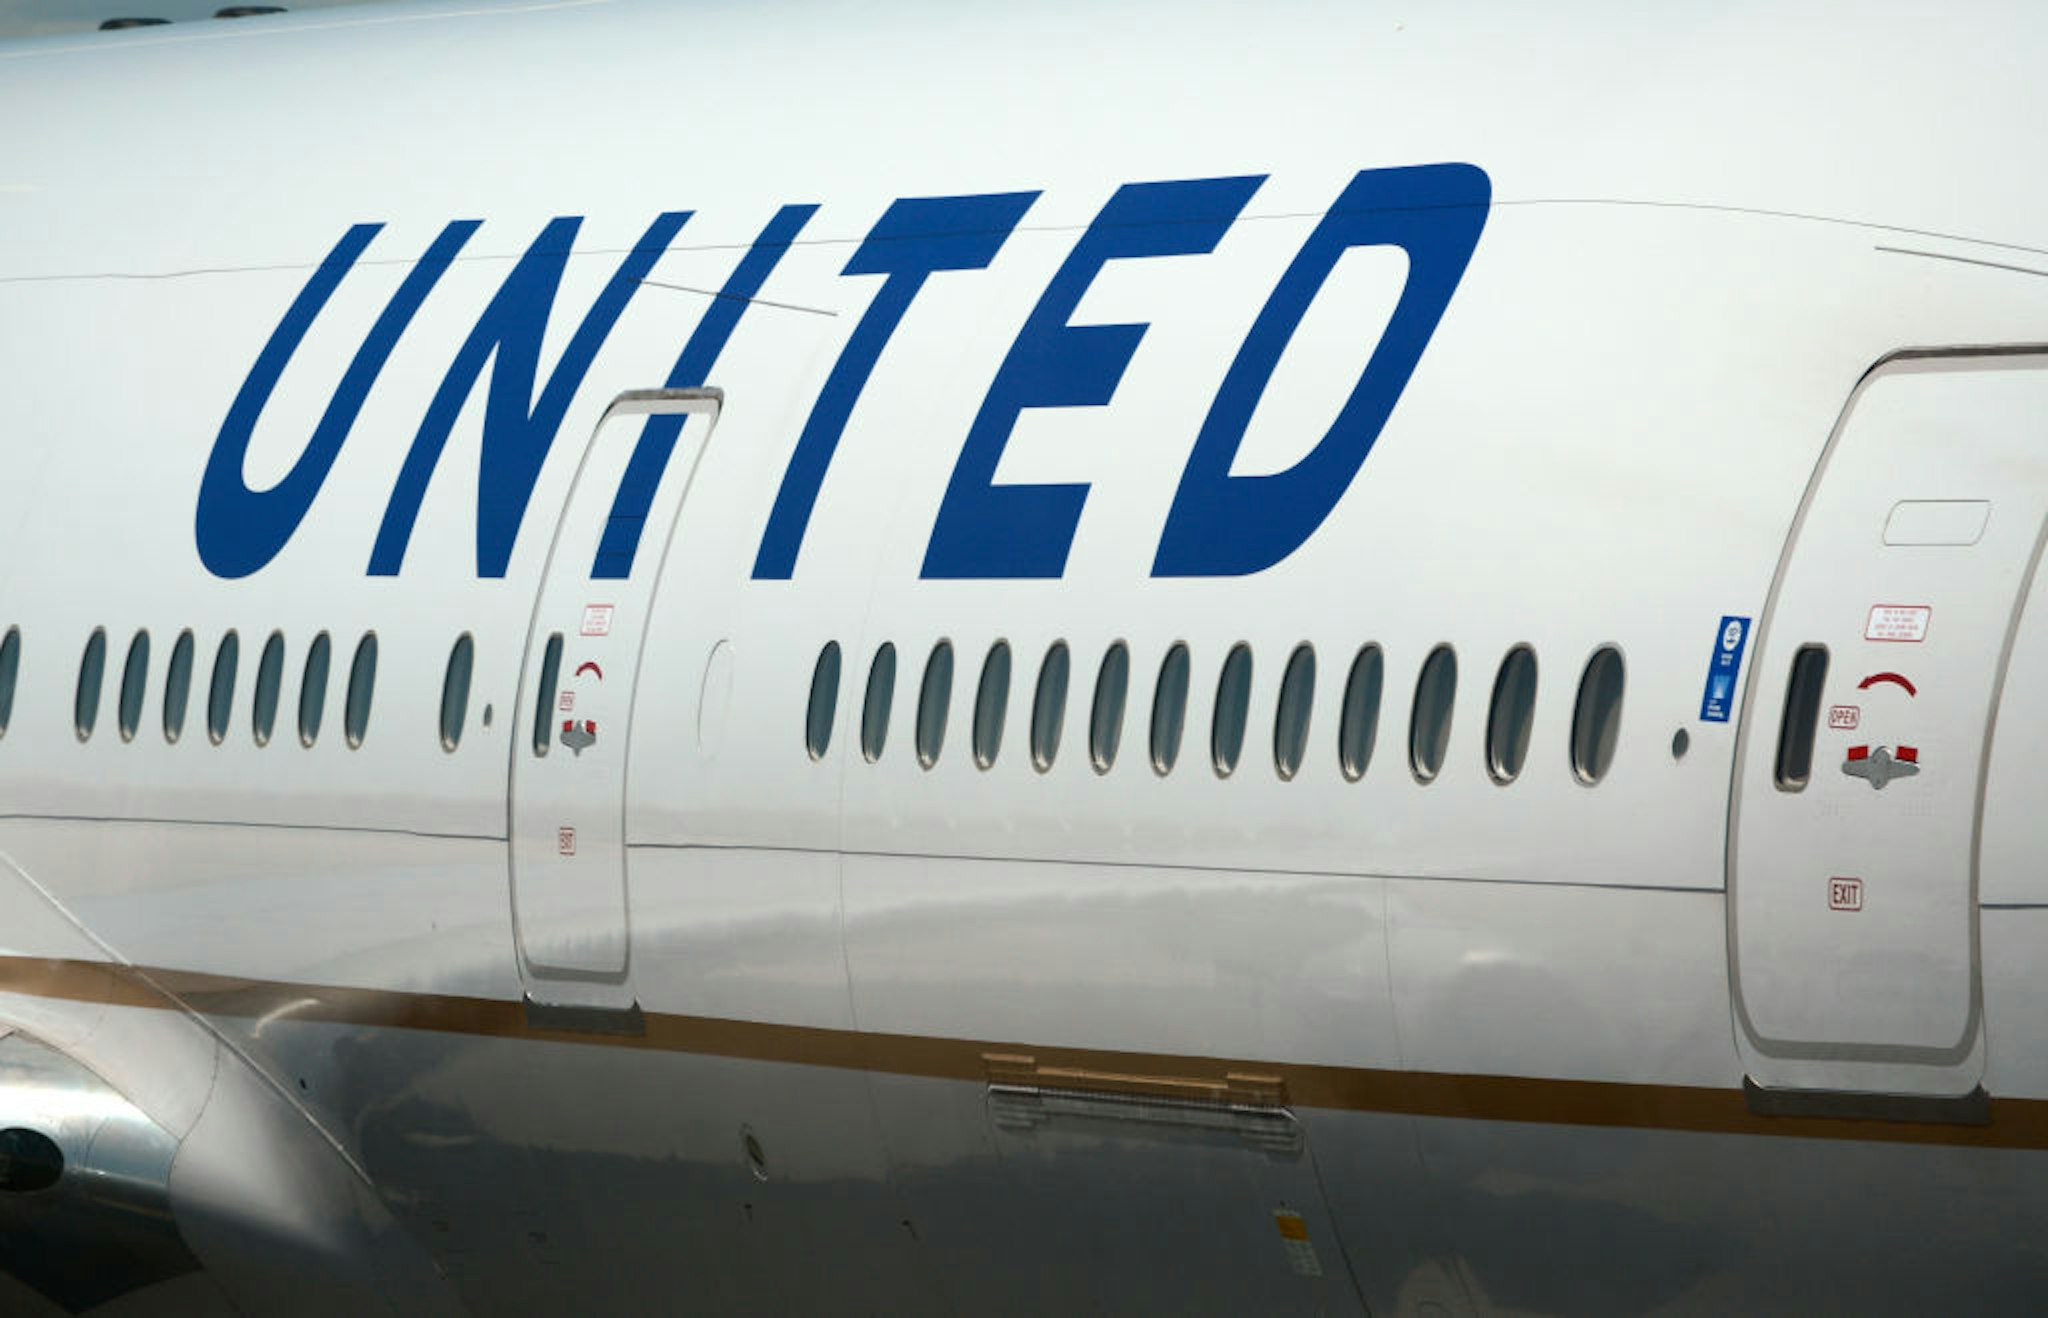 DENVER, COLORADO - JUNE 20, 2019: A United Airlines Boeing 777 passenger aircraft at Denver International Airport in Denver, Colorado.